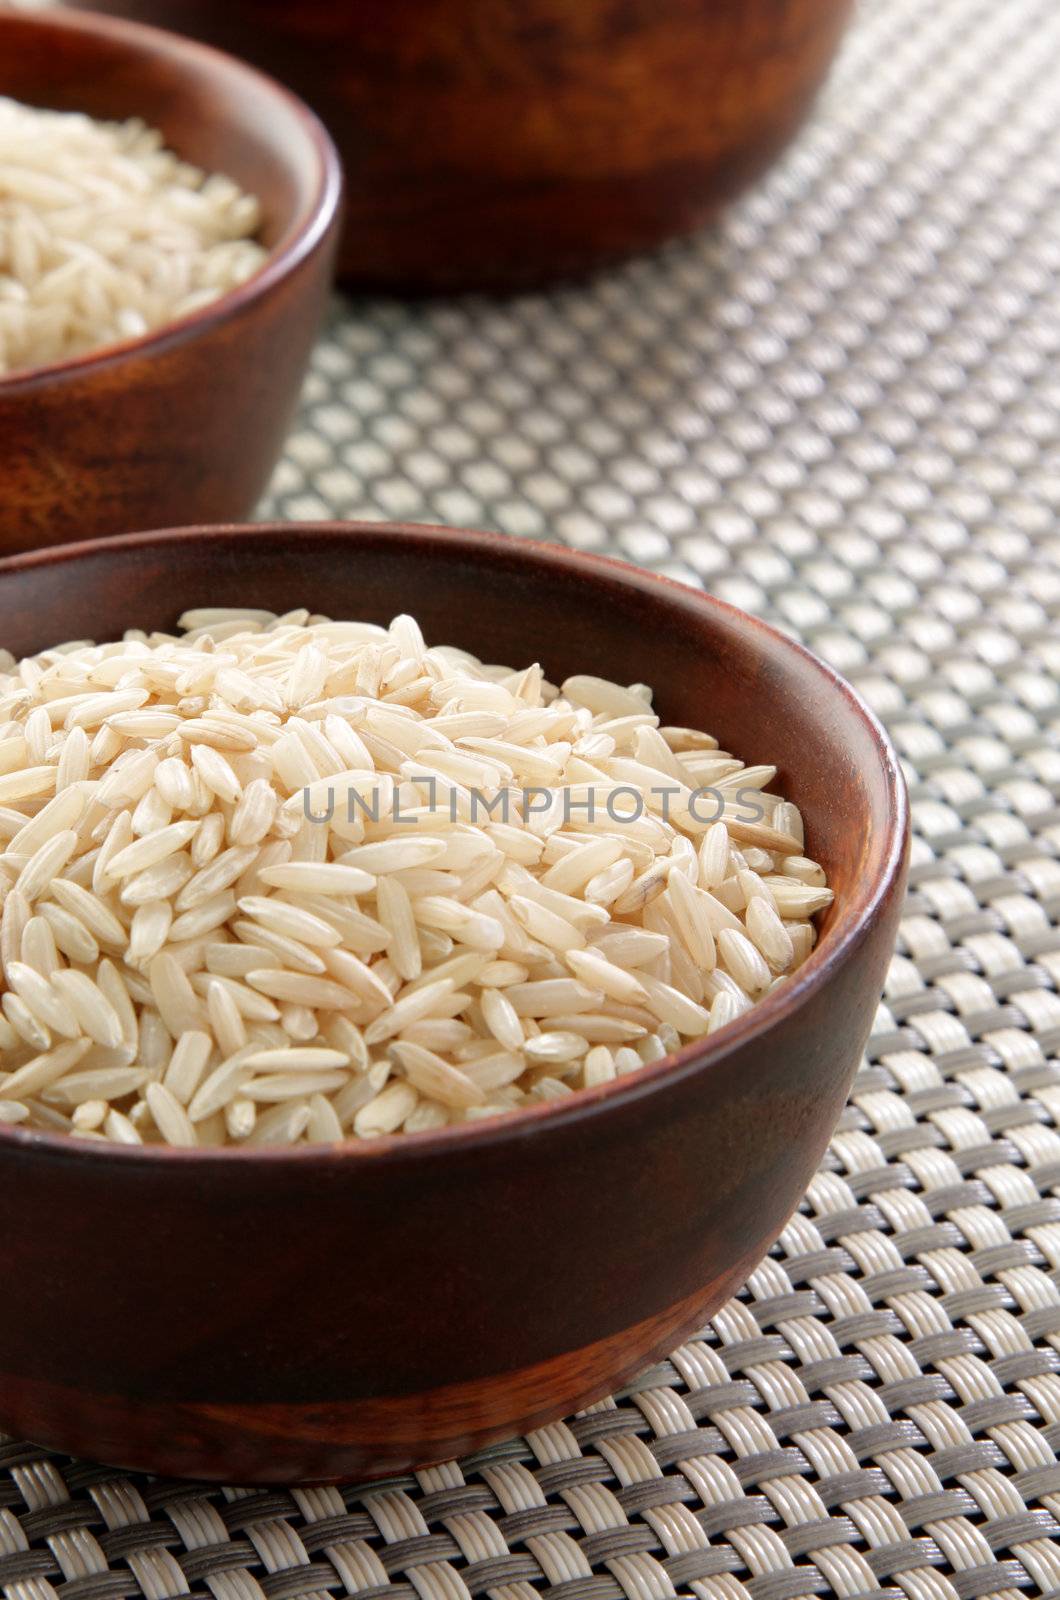 Basmati rice bowls by carterphoto